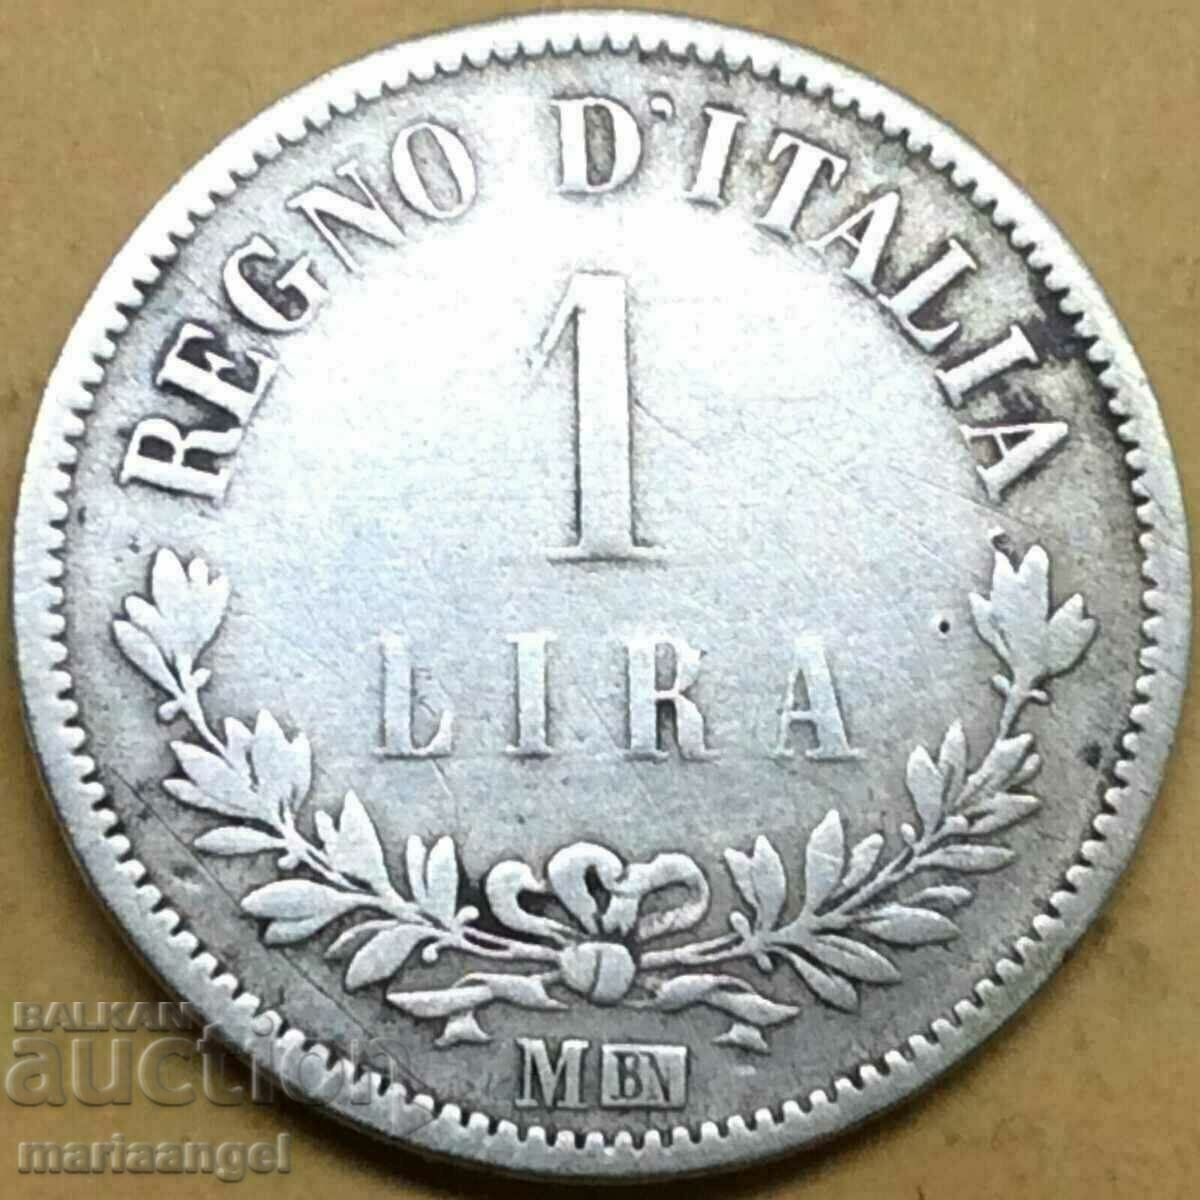 Italy 1 lira "Digit" 1863 M - Milan silver